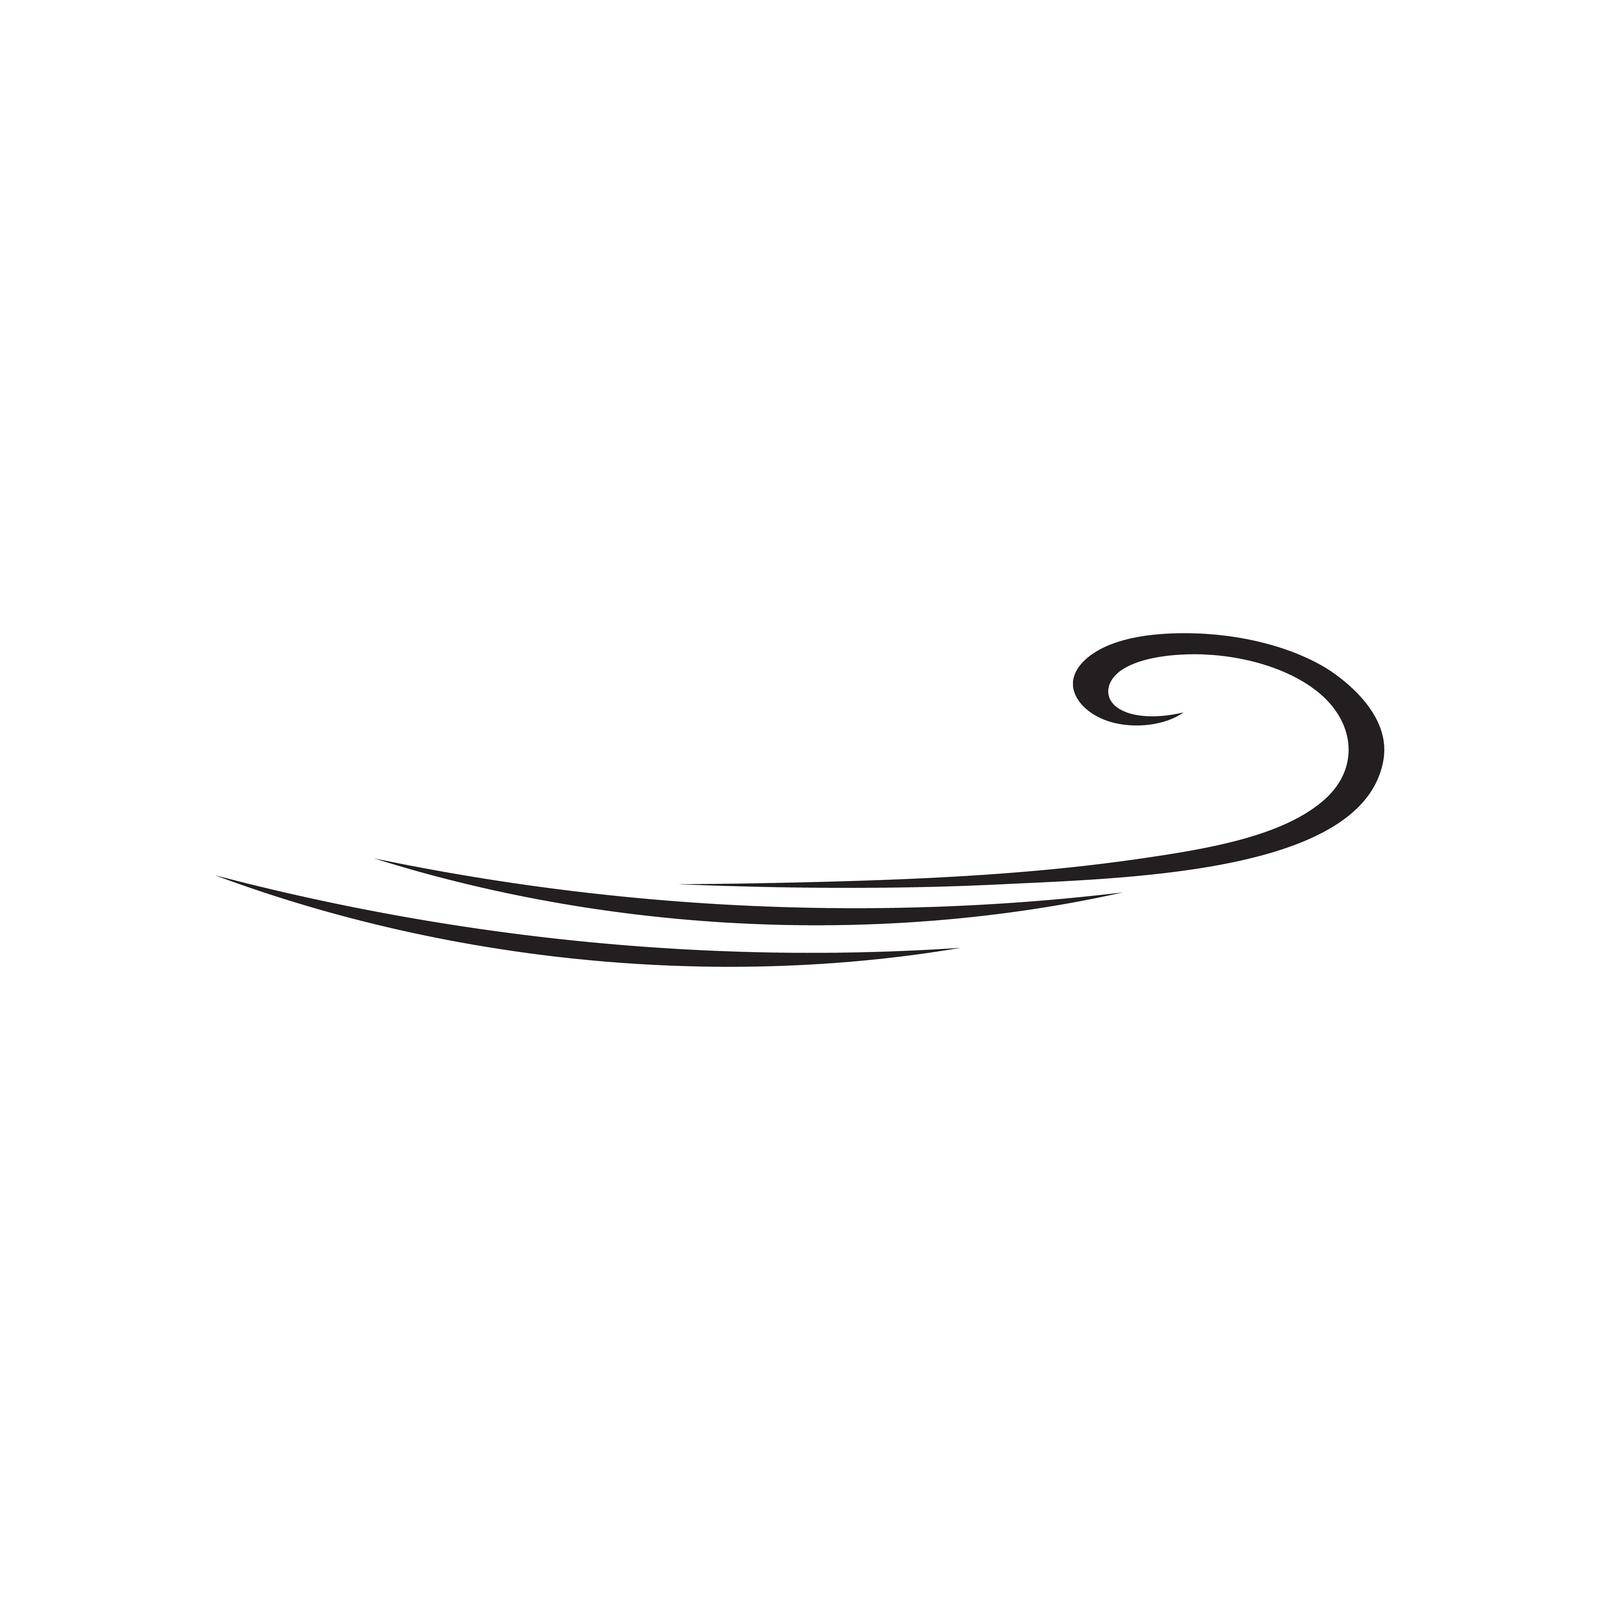 Wind icon logo free vector 